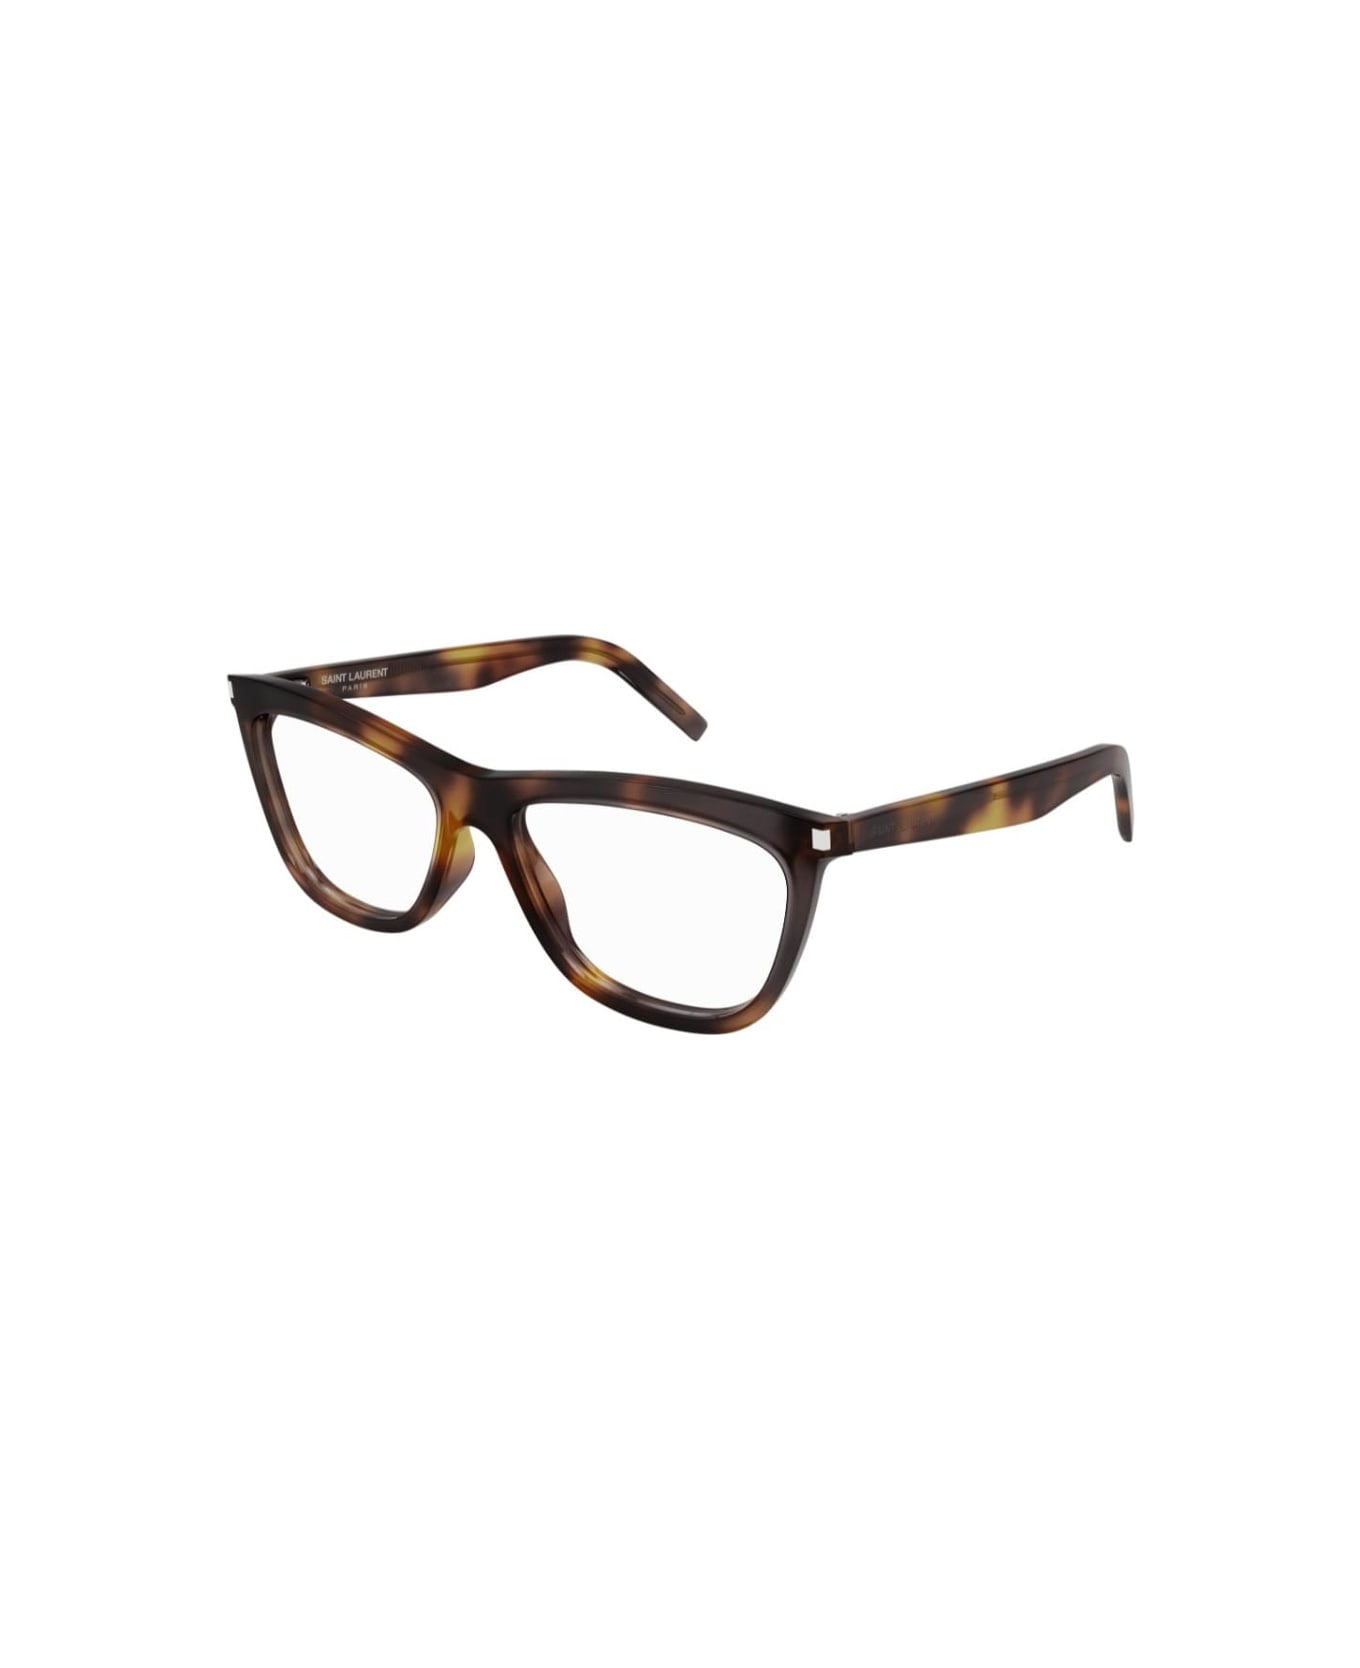 Saint Laurent Eyewear sl 517 002 Glasses